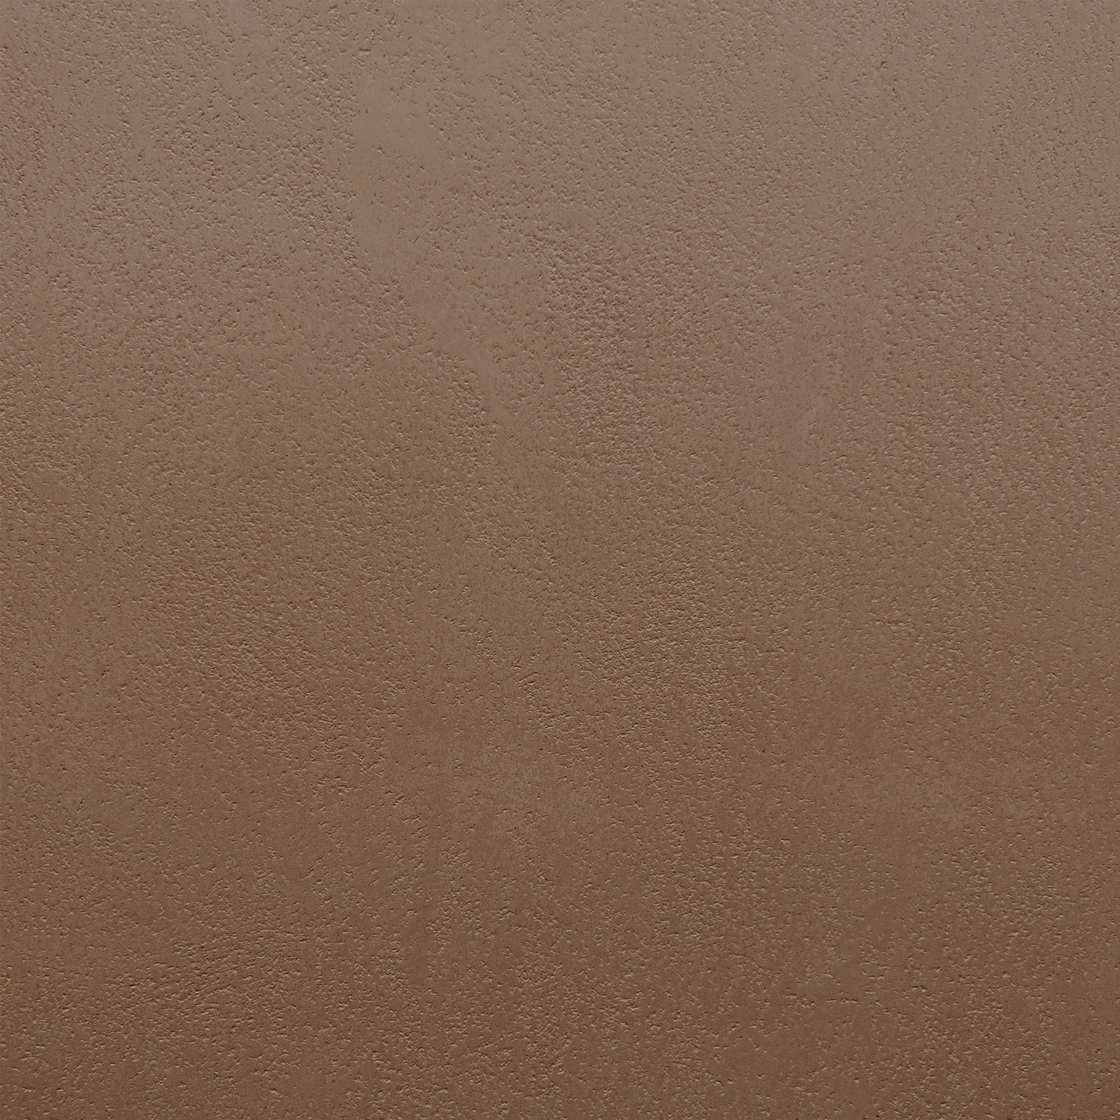 Close up of Armourcoat leatherstone exterior polished plaster finish - 60